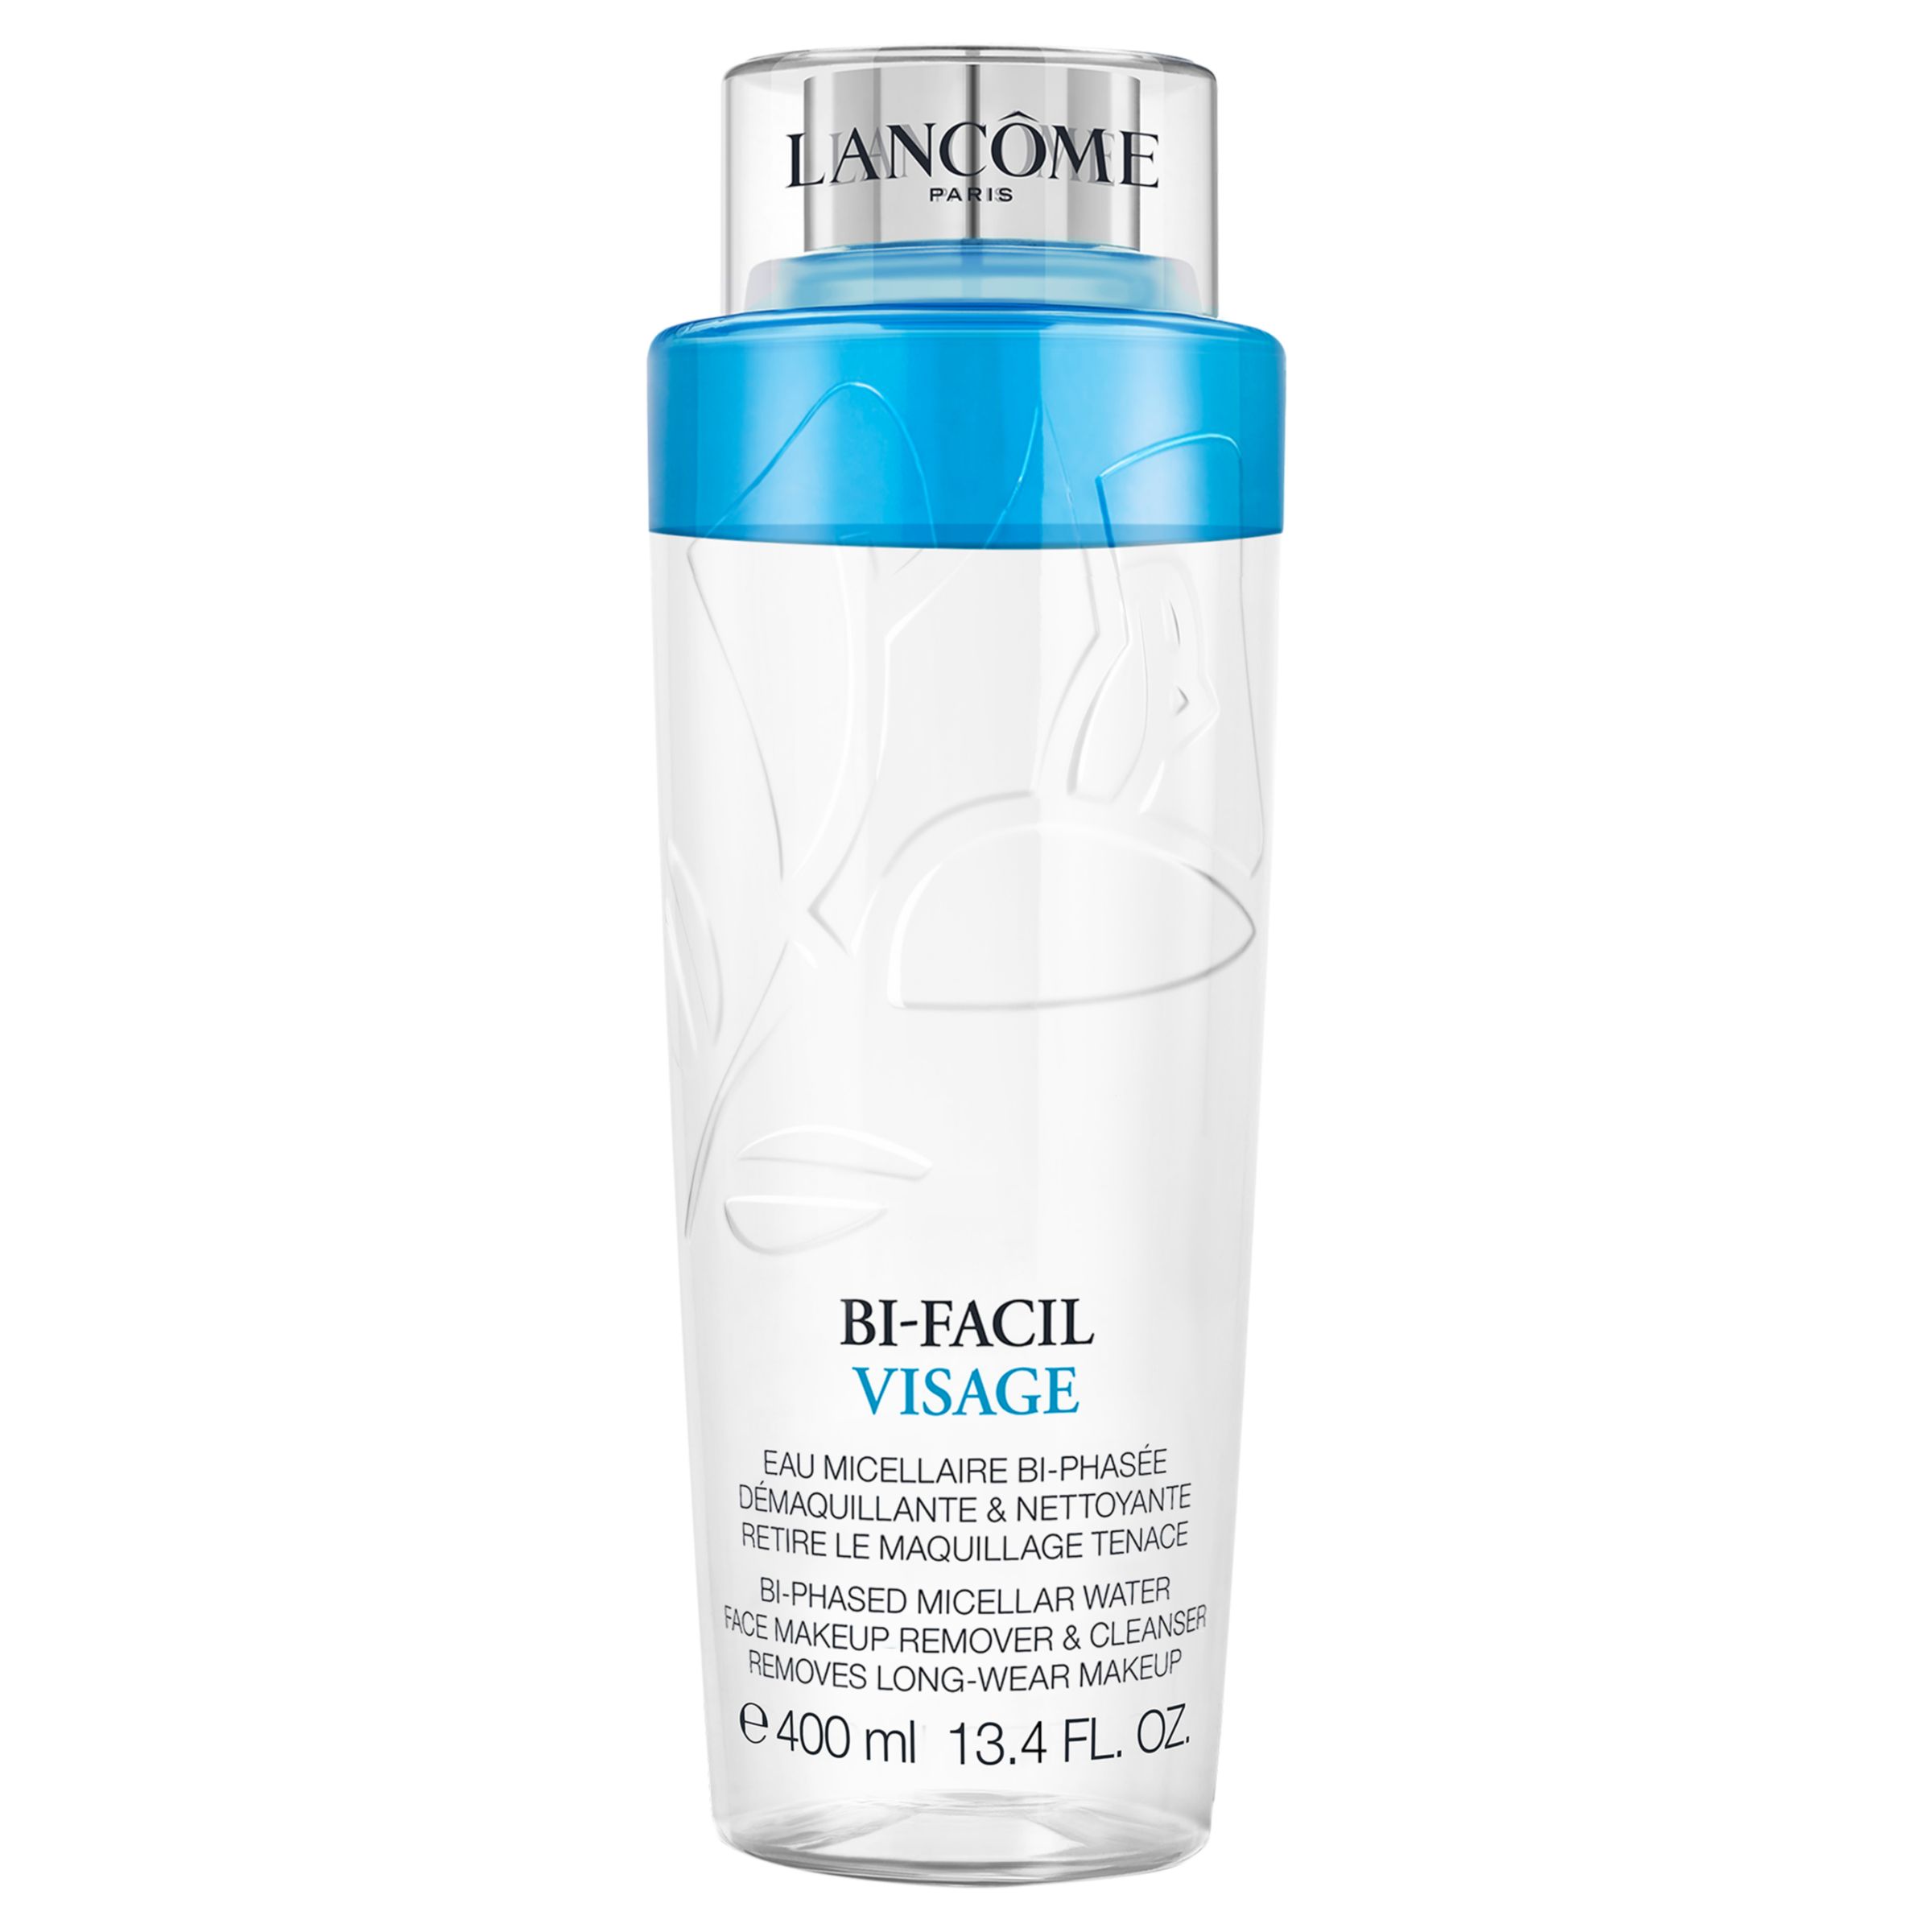 Lancôme Bi-Facil Visage Makeup Remover & Cleanser, 400ml